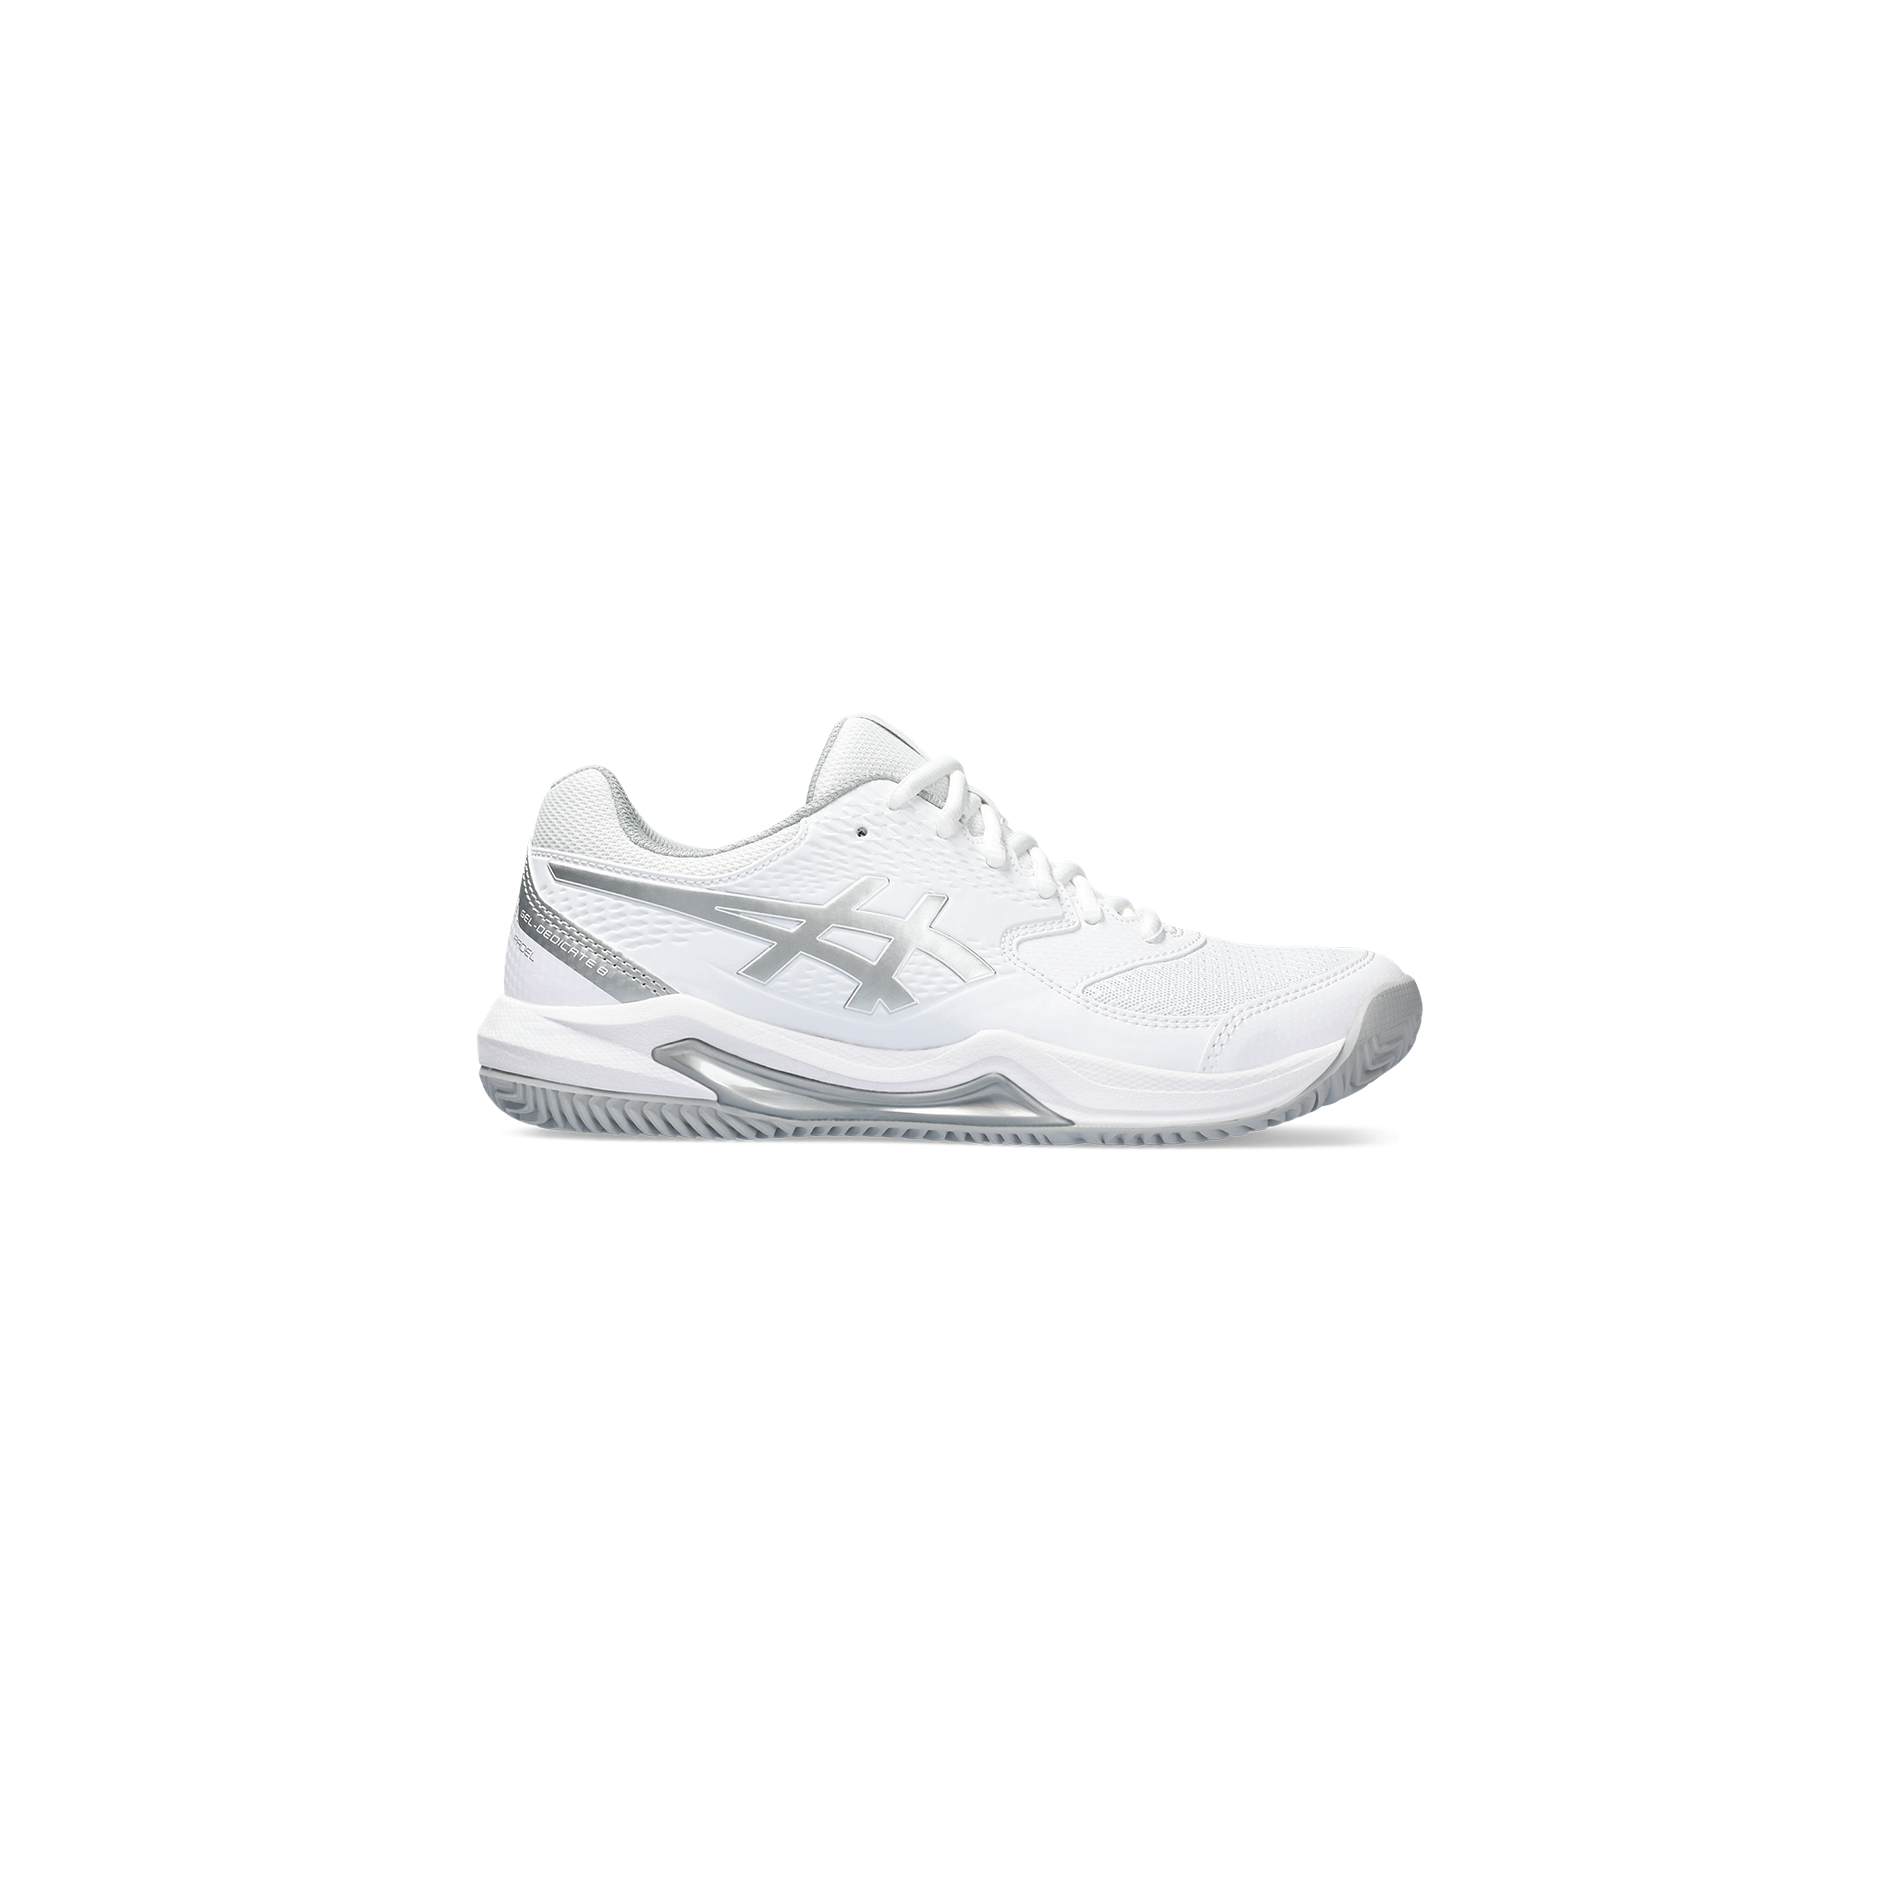 Asics Gel Dedicate 8 Padel Zapatillas de Padel Mujer - White